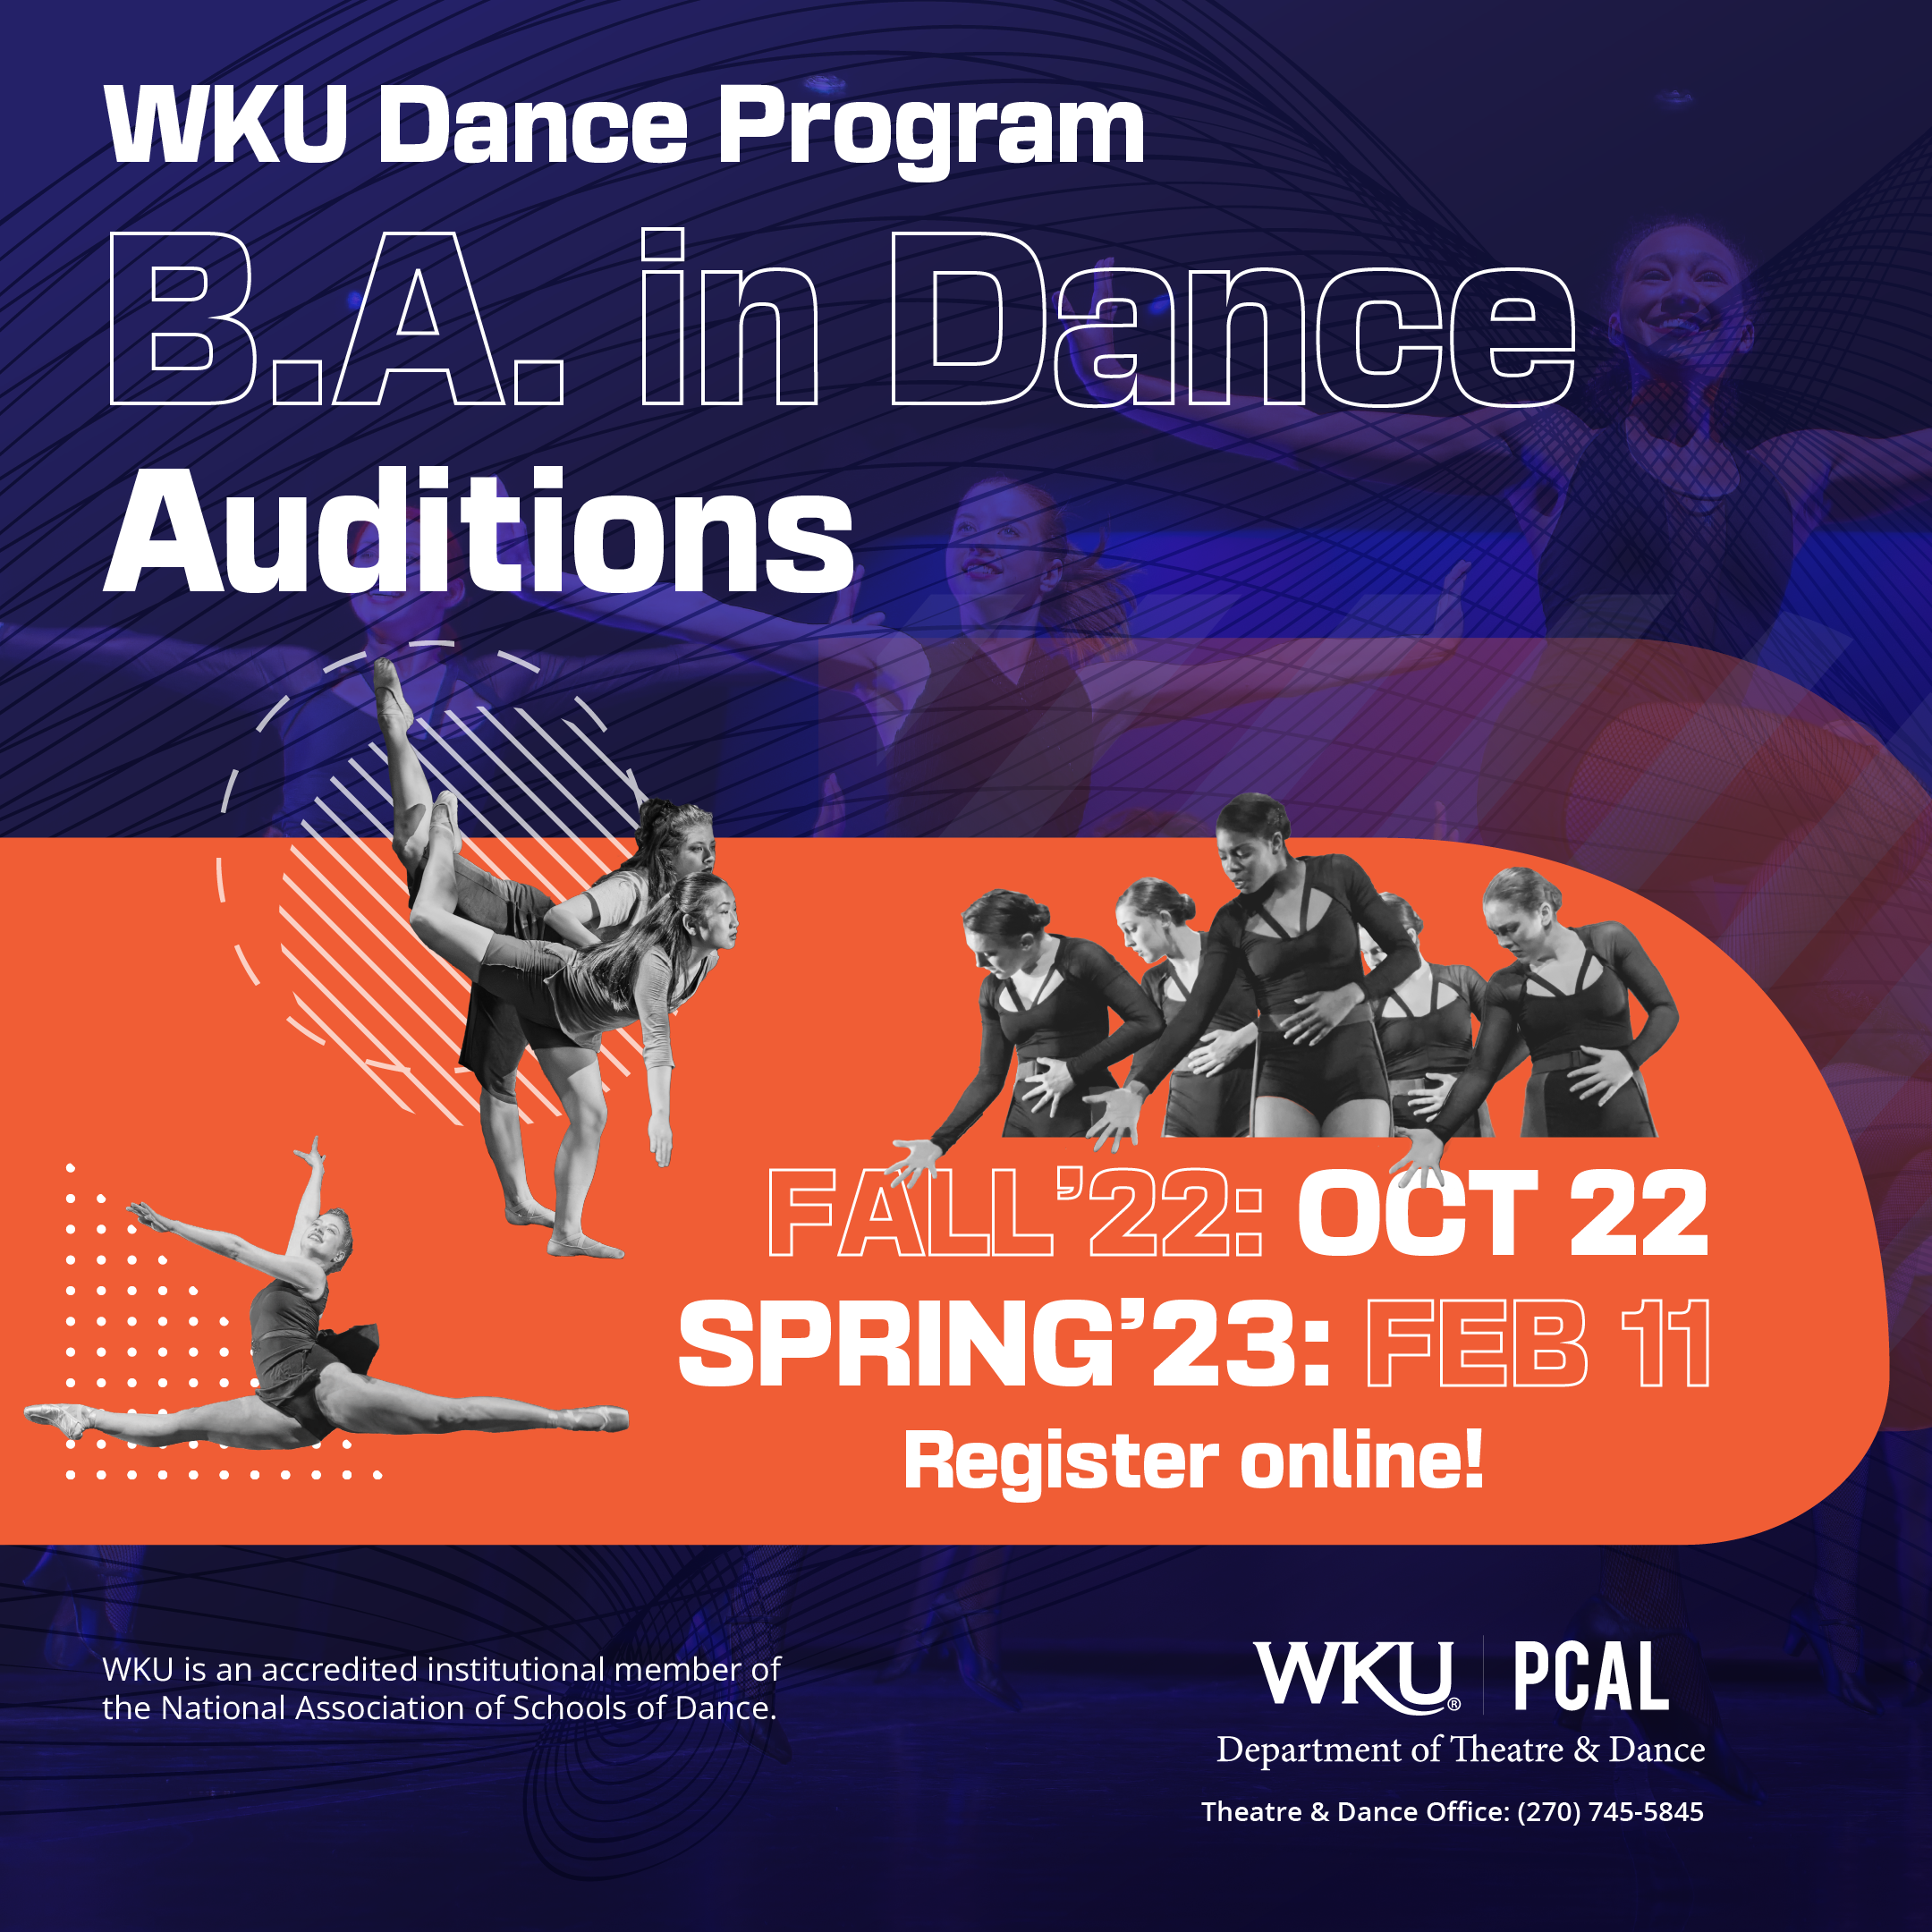 Dance audition info